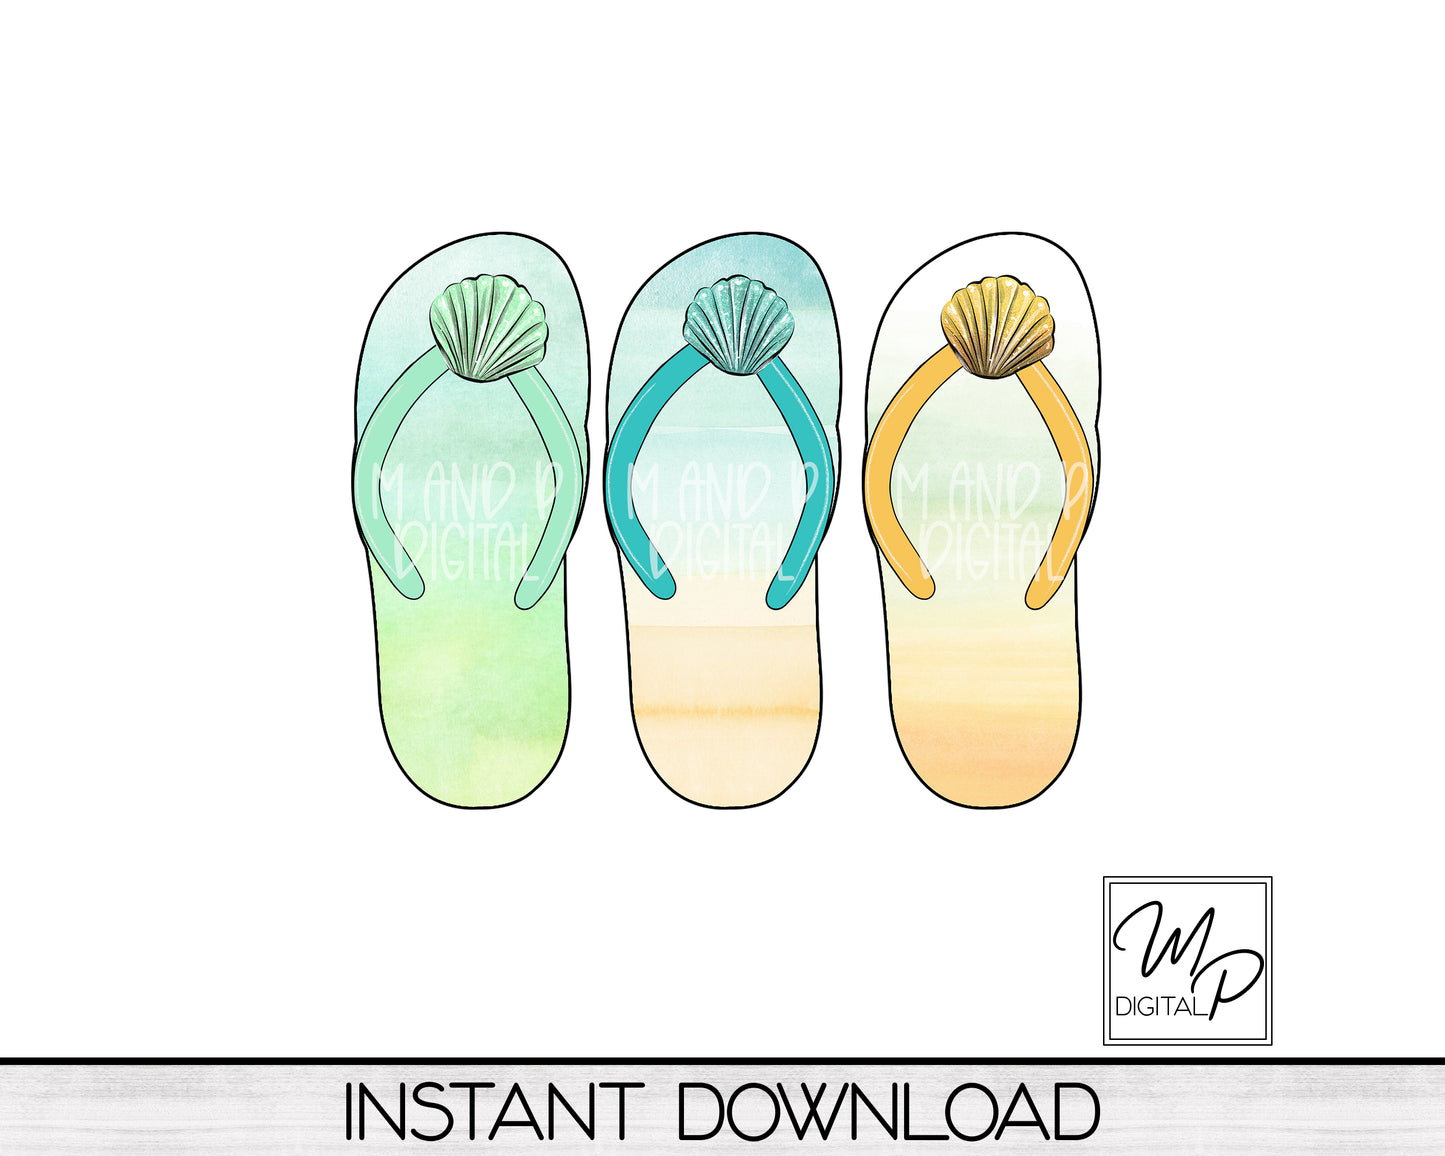 Beach Flip Flop Earrings Bundle Sublimation PNG Design, Digital Download